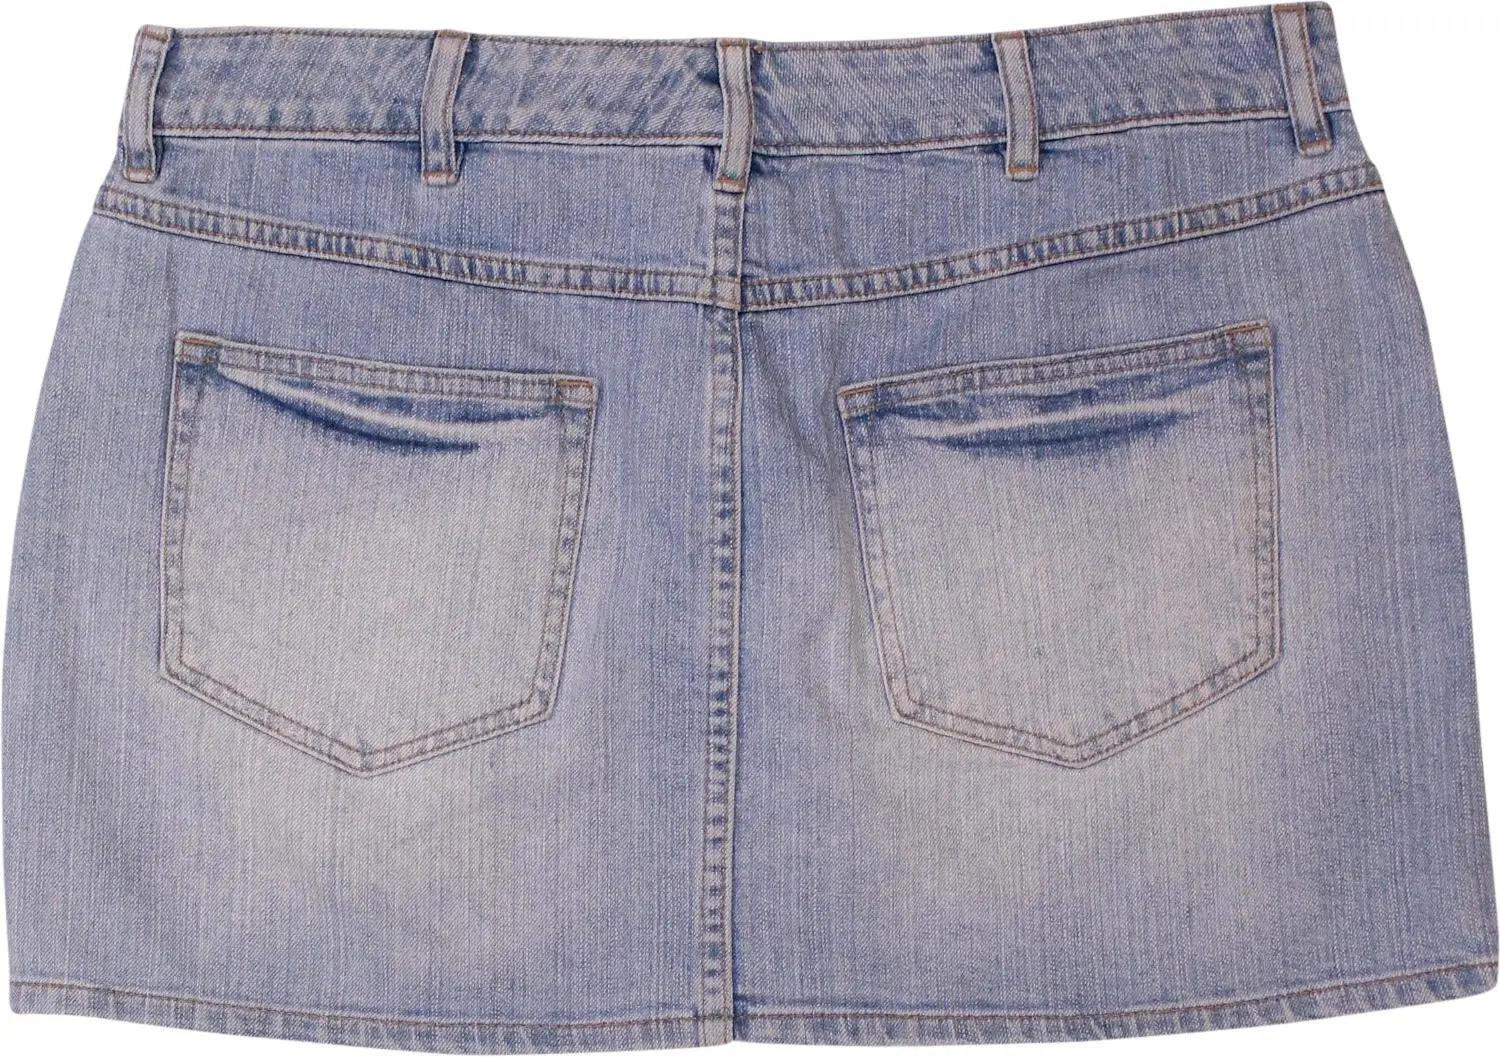 H&M - Denim Mini Skirt- ThriftTale.com - Vintage and second handclothing